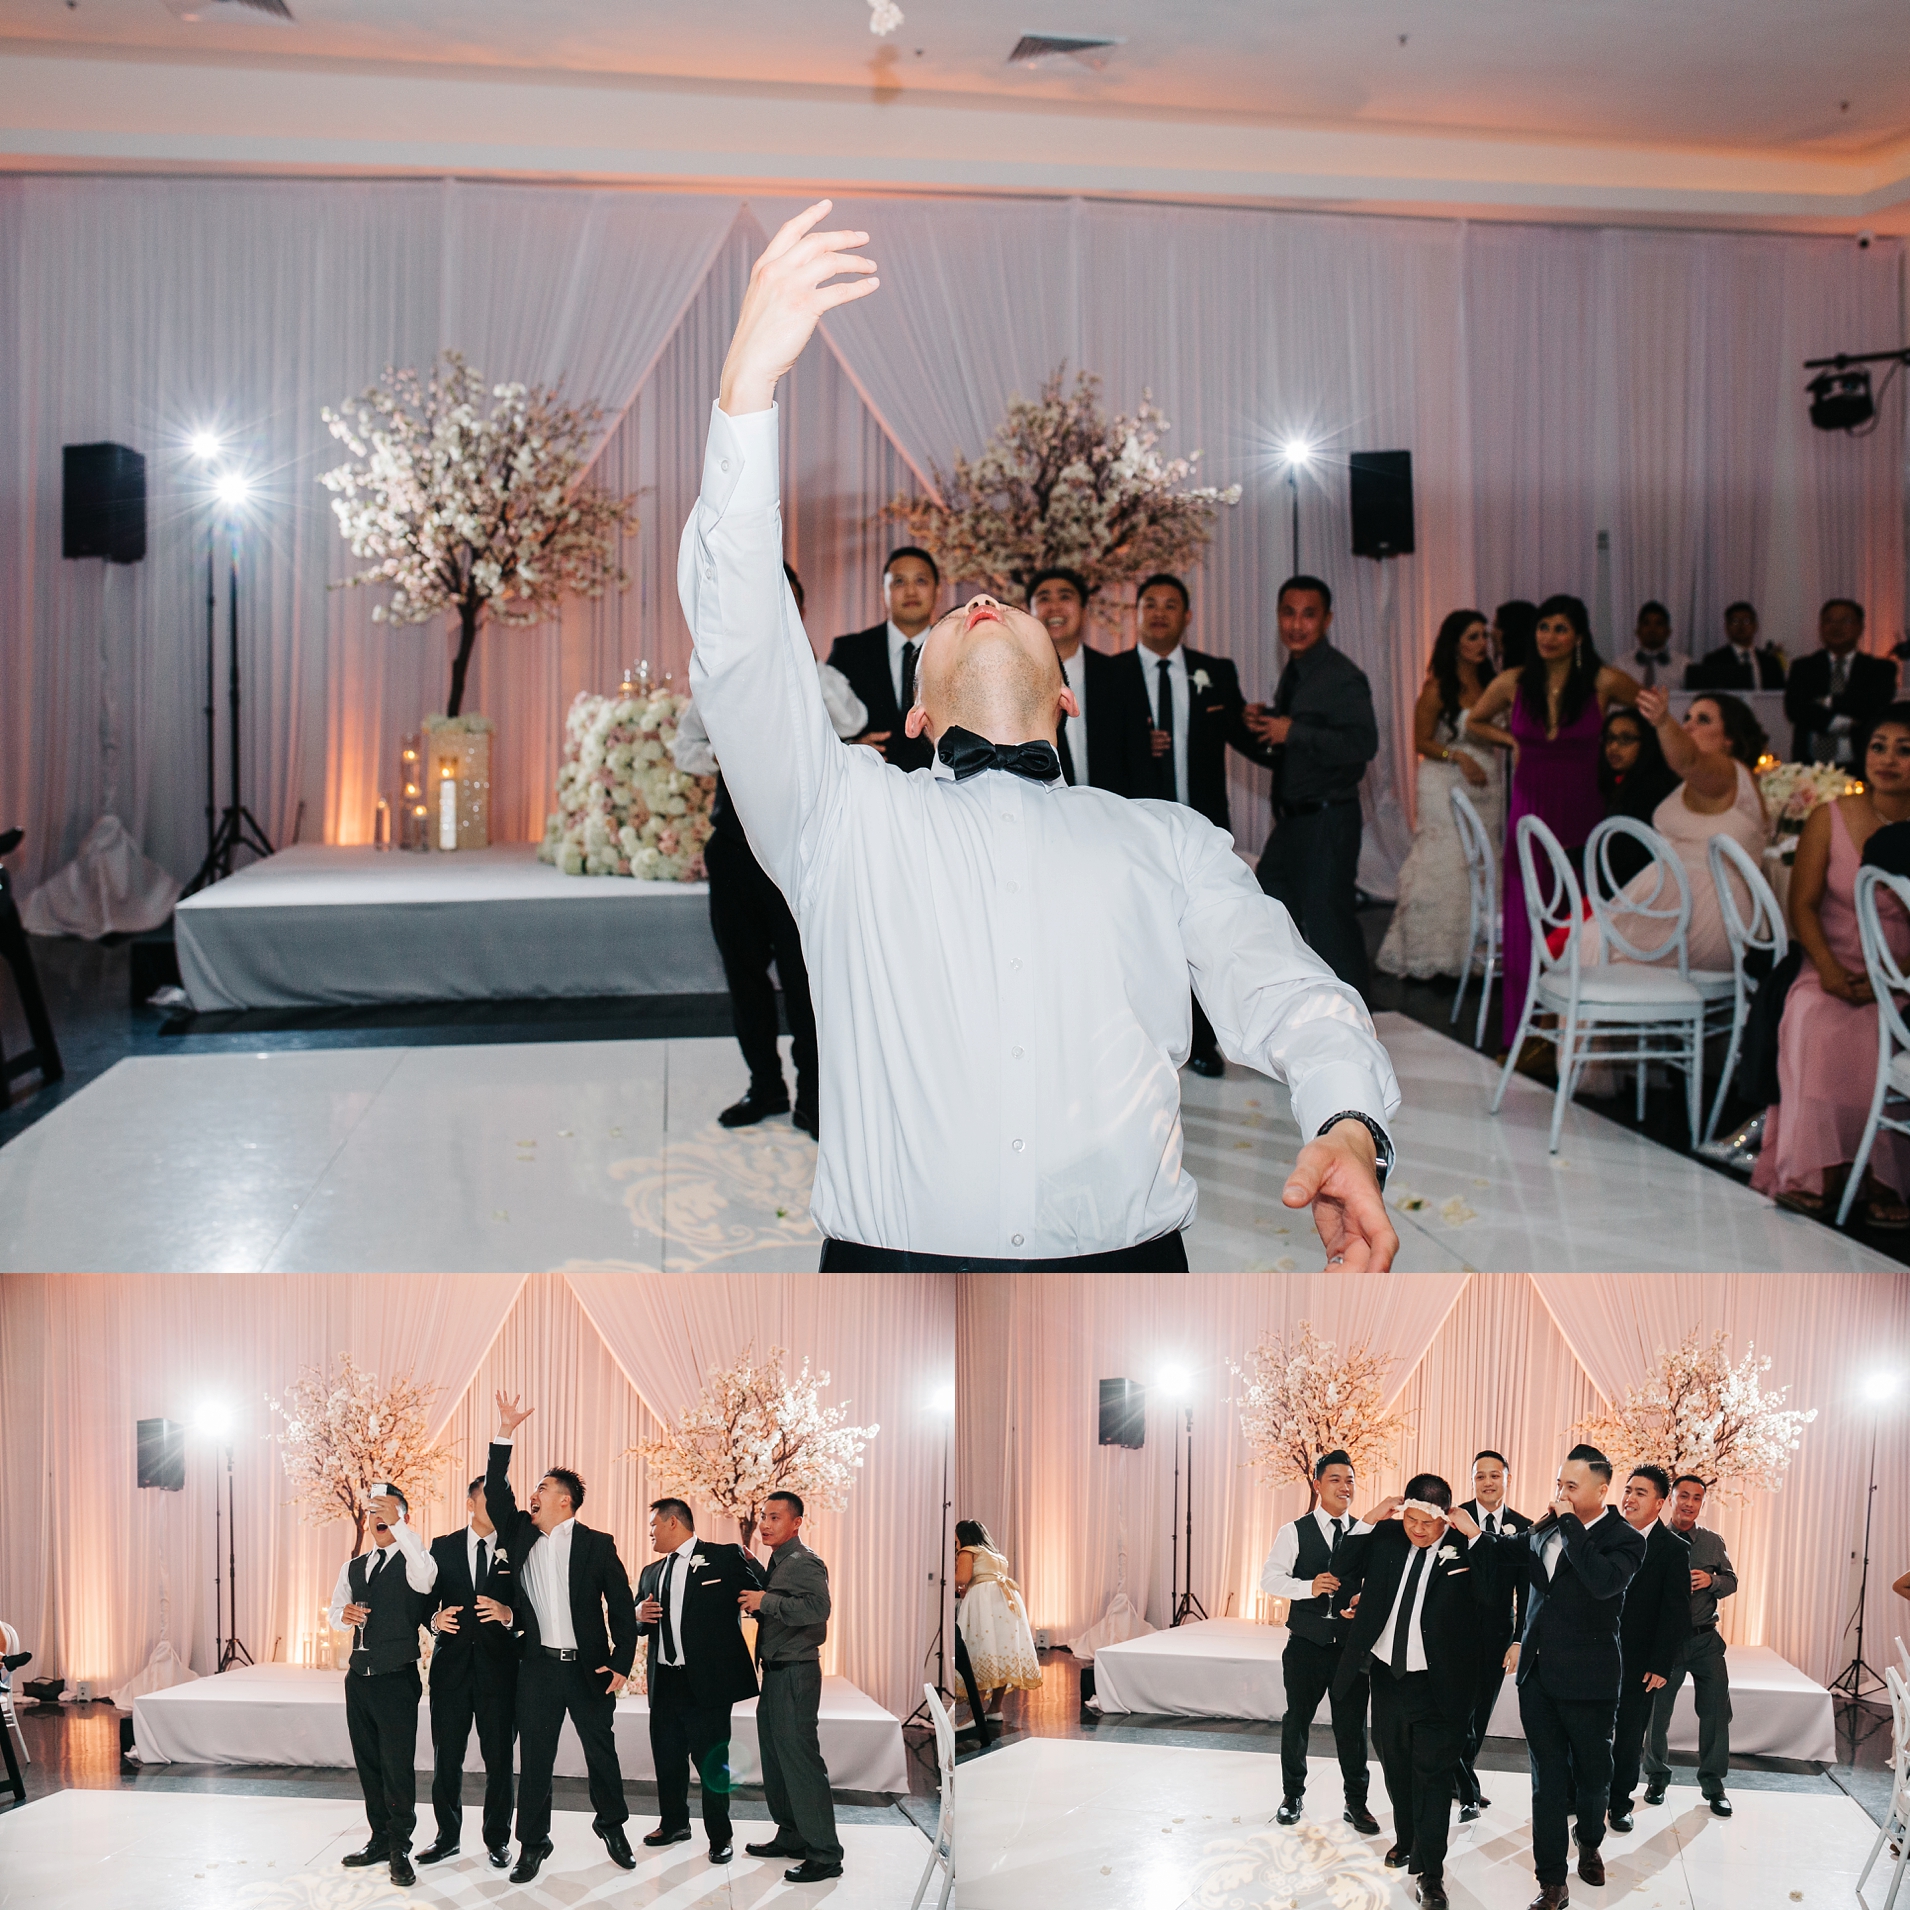 Garter Toss-Wedding Reception by Brittney Hannon Photography at Venue by Three Petals Wedding in Huntington Beach, CA 